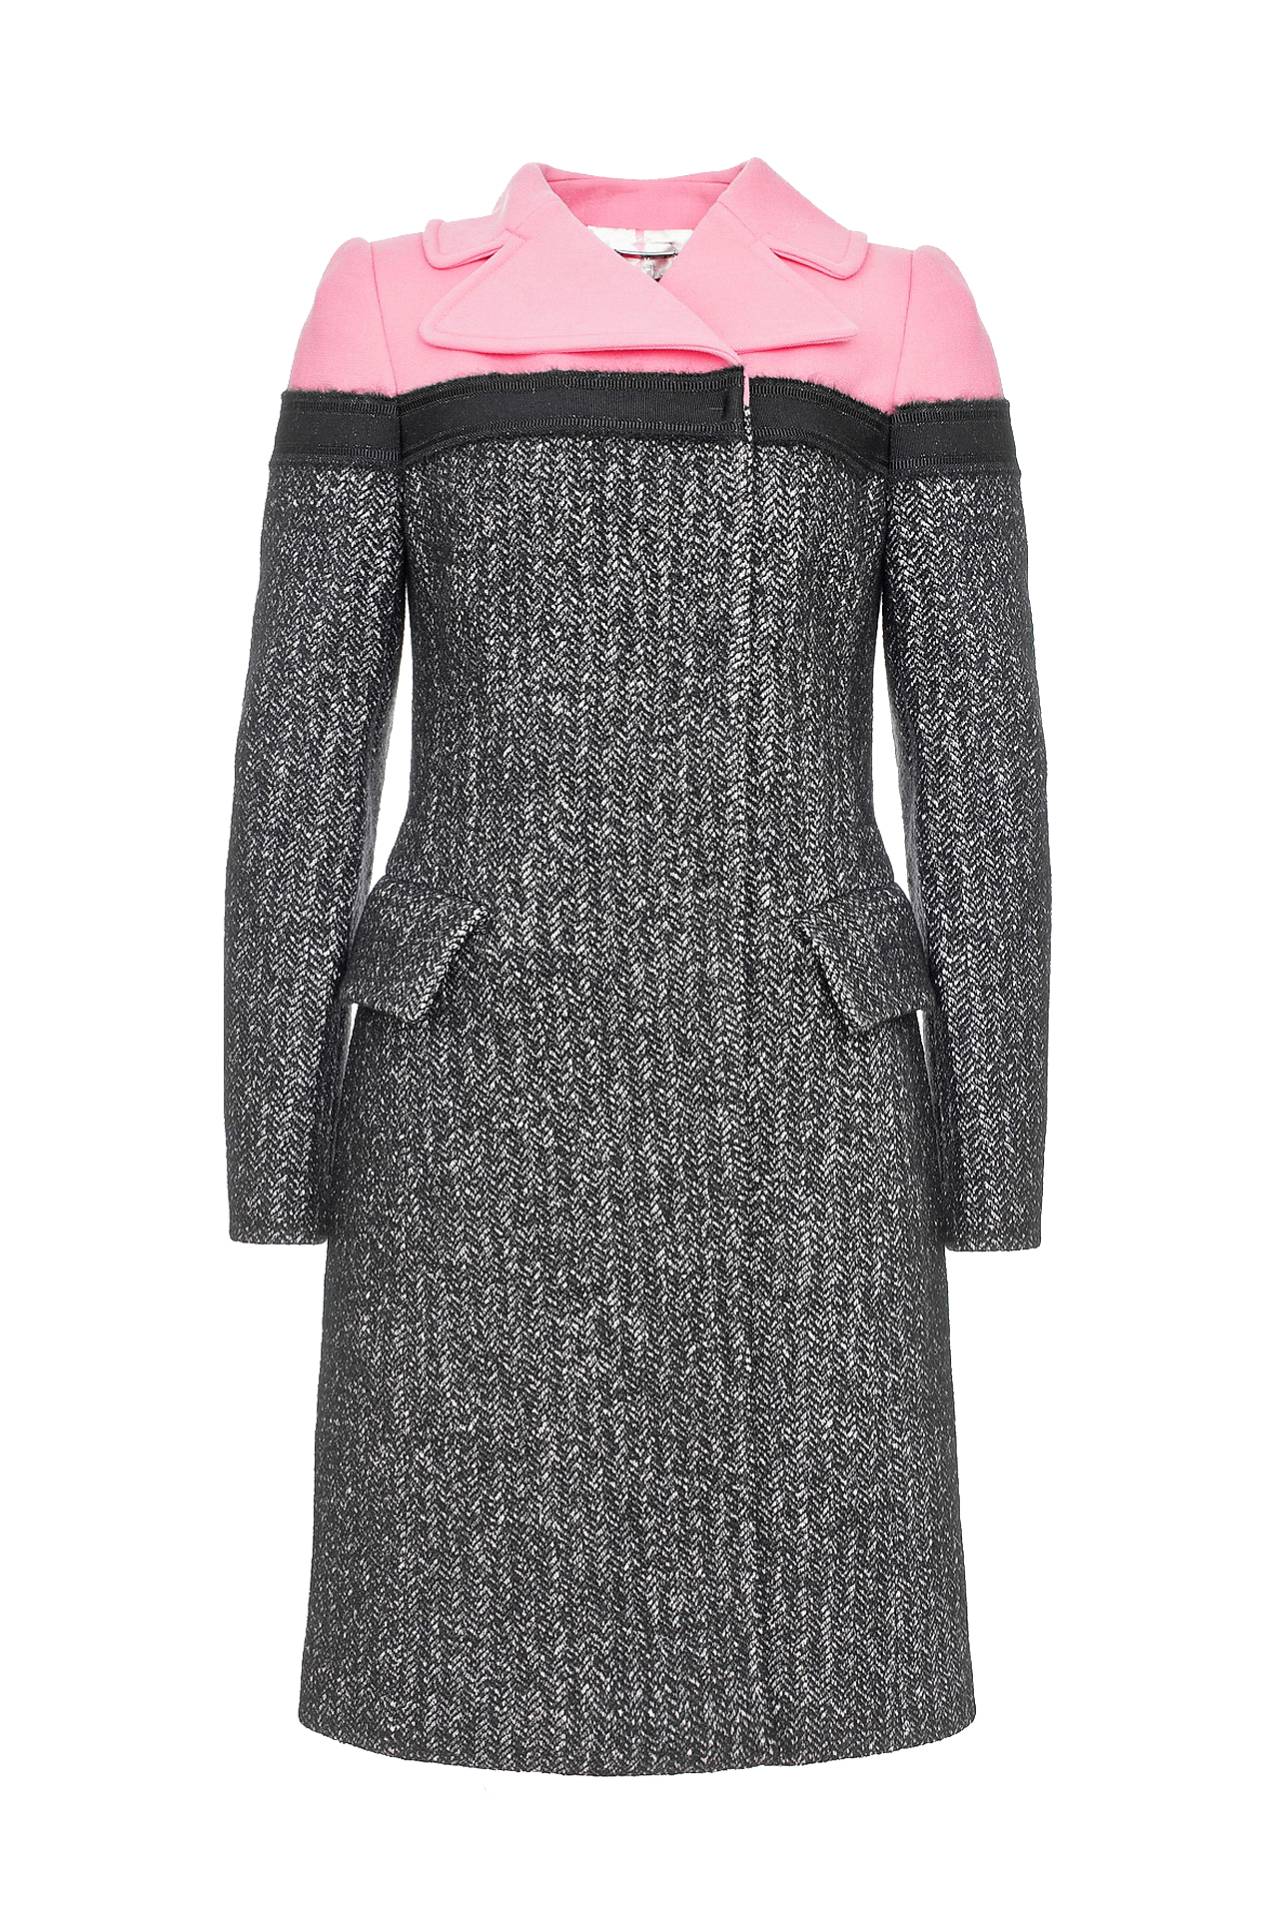 Одежда женская Пальто VDP VIA DELLE PERLE (6642/15.1). Купить за 92000 руб.